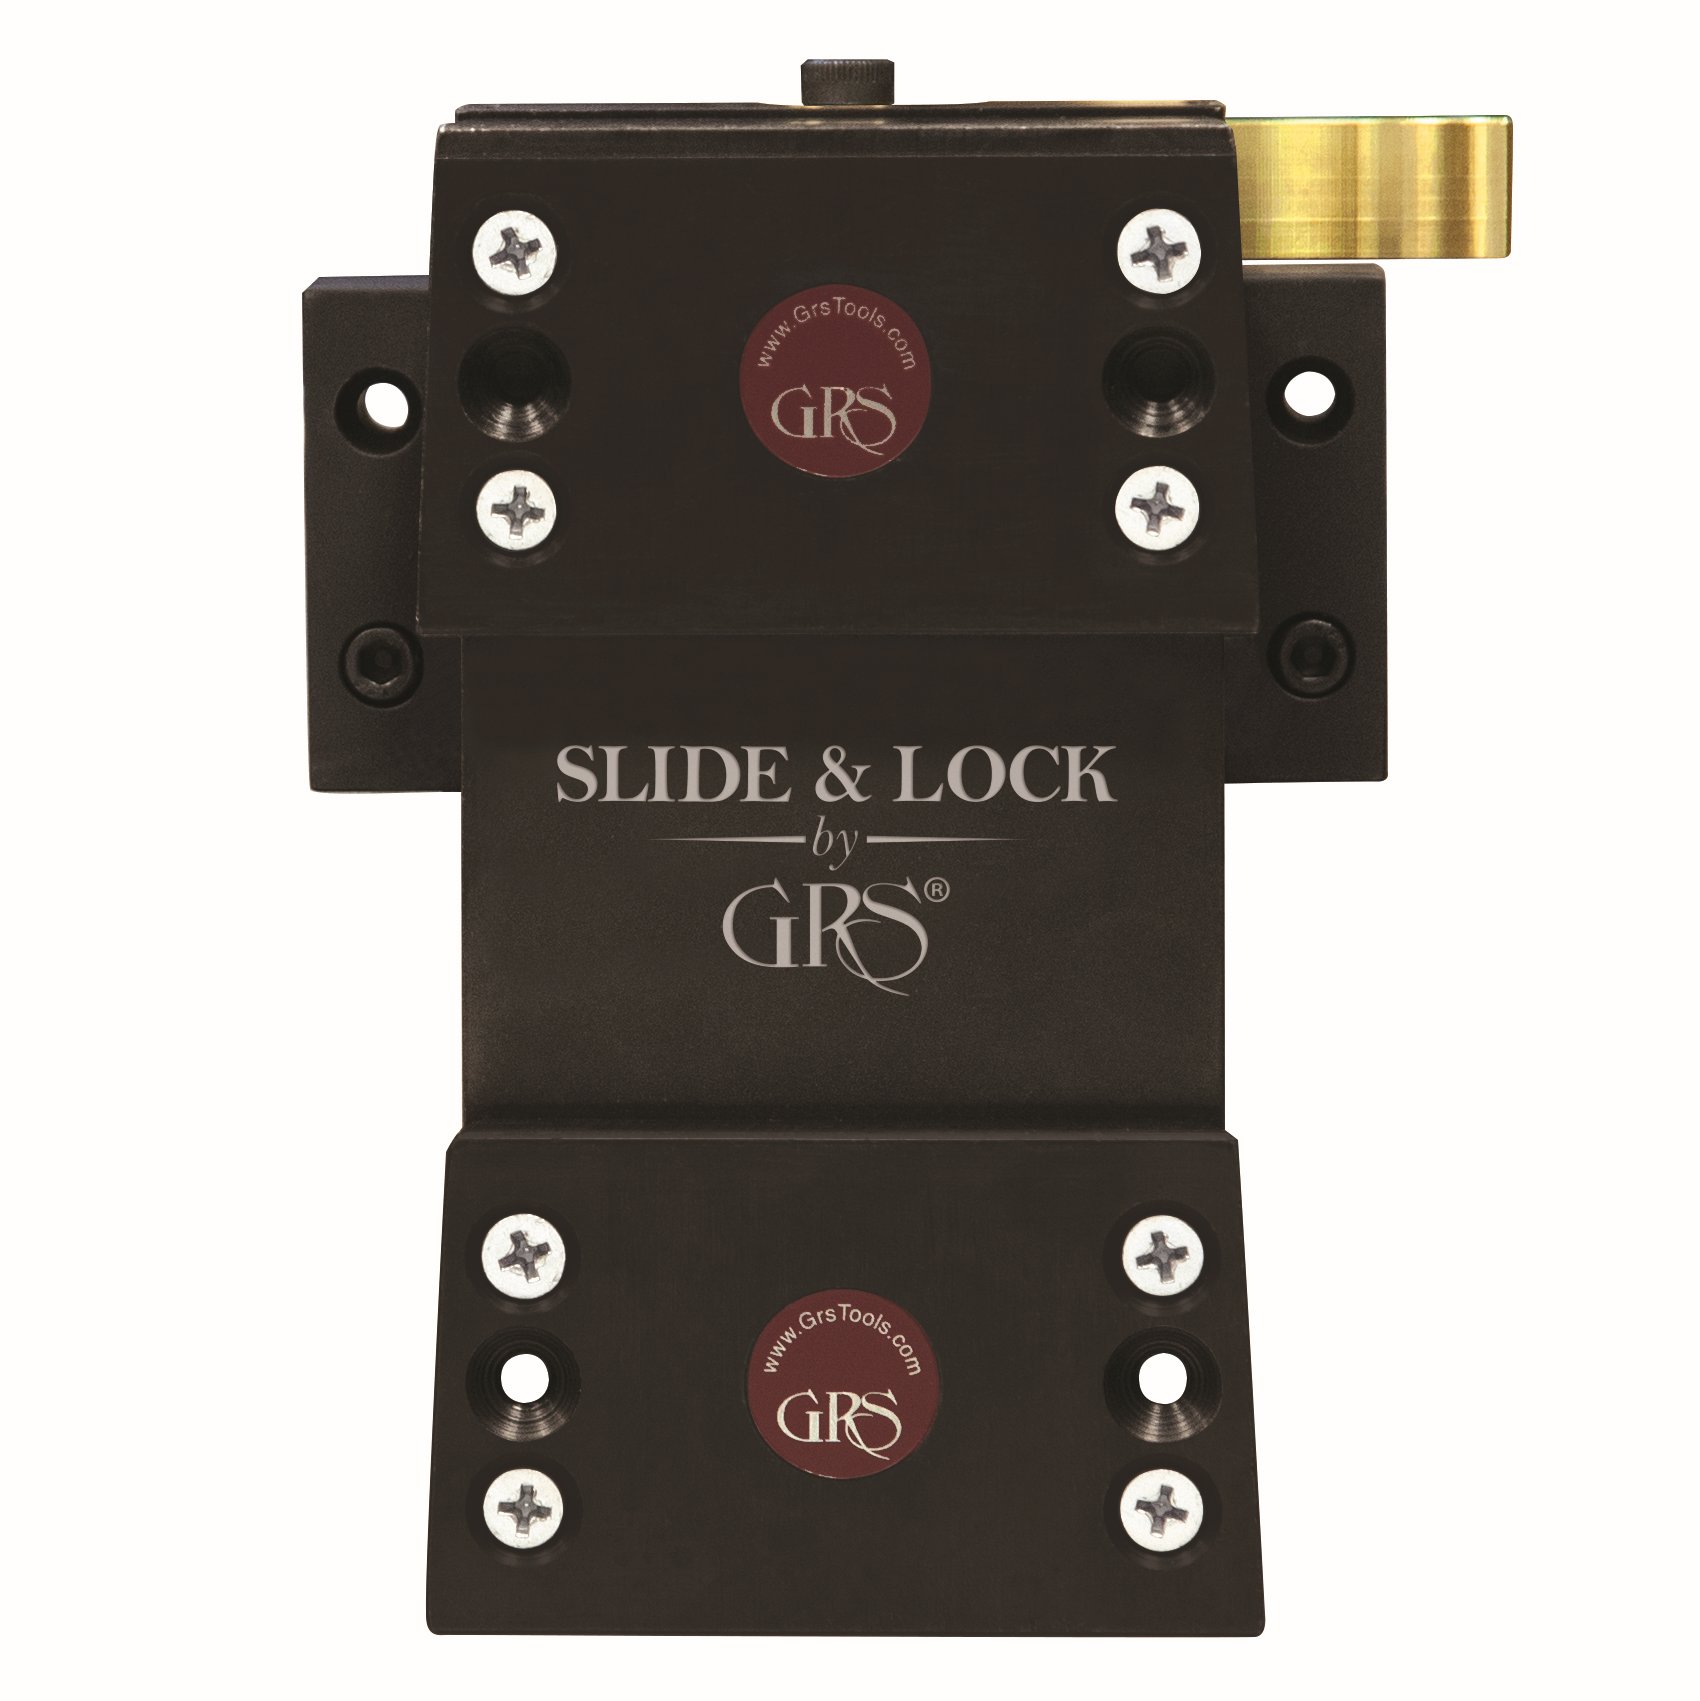 GRS Slide & Lock Mini für Benchmate